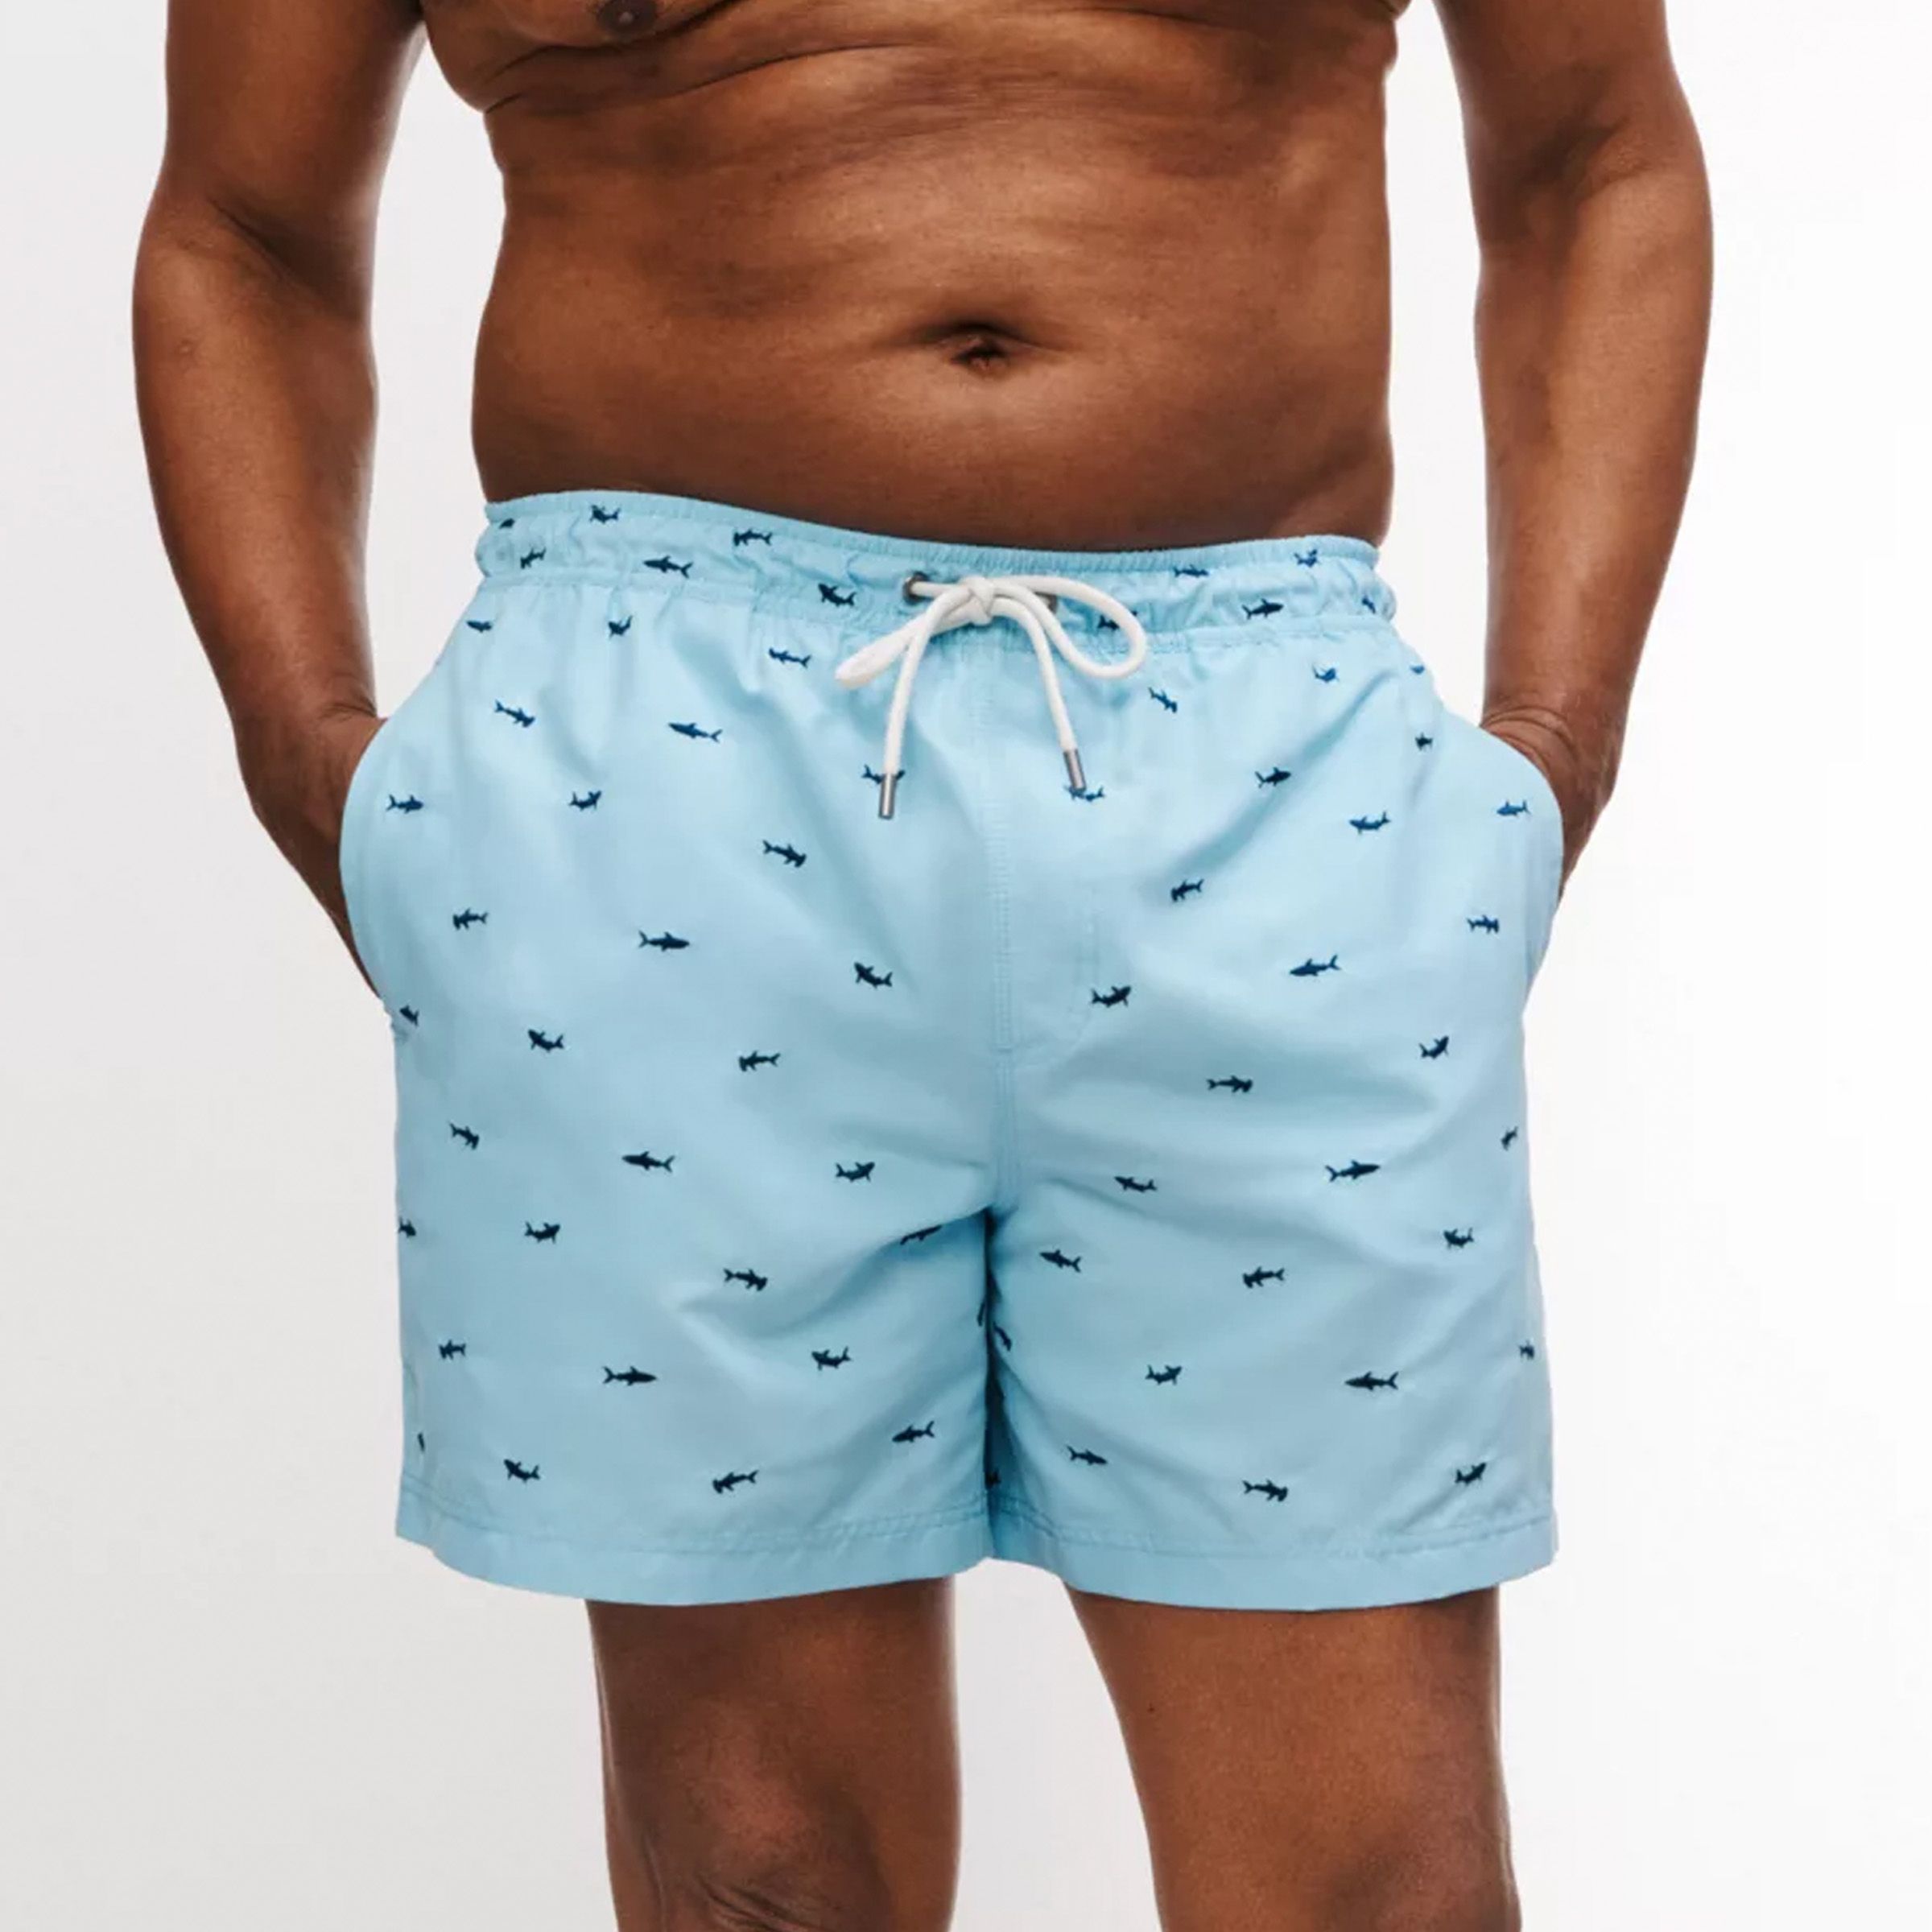 Louis Baby Blue Shorts - Mid Thigh Length Men Swim Shorts